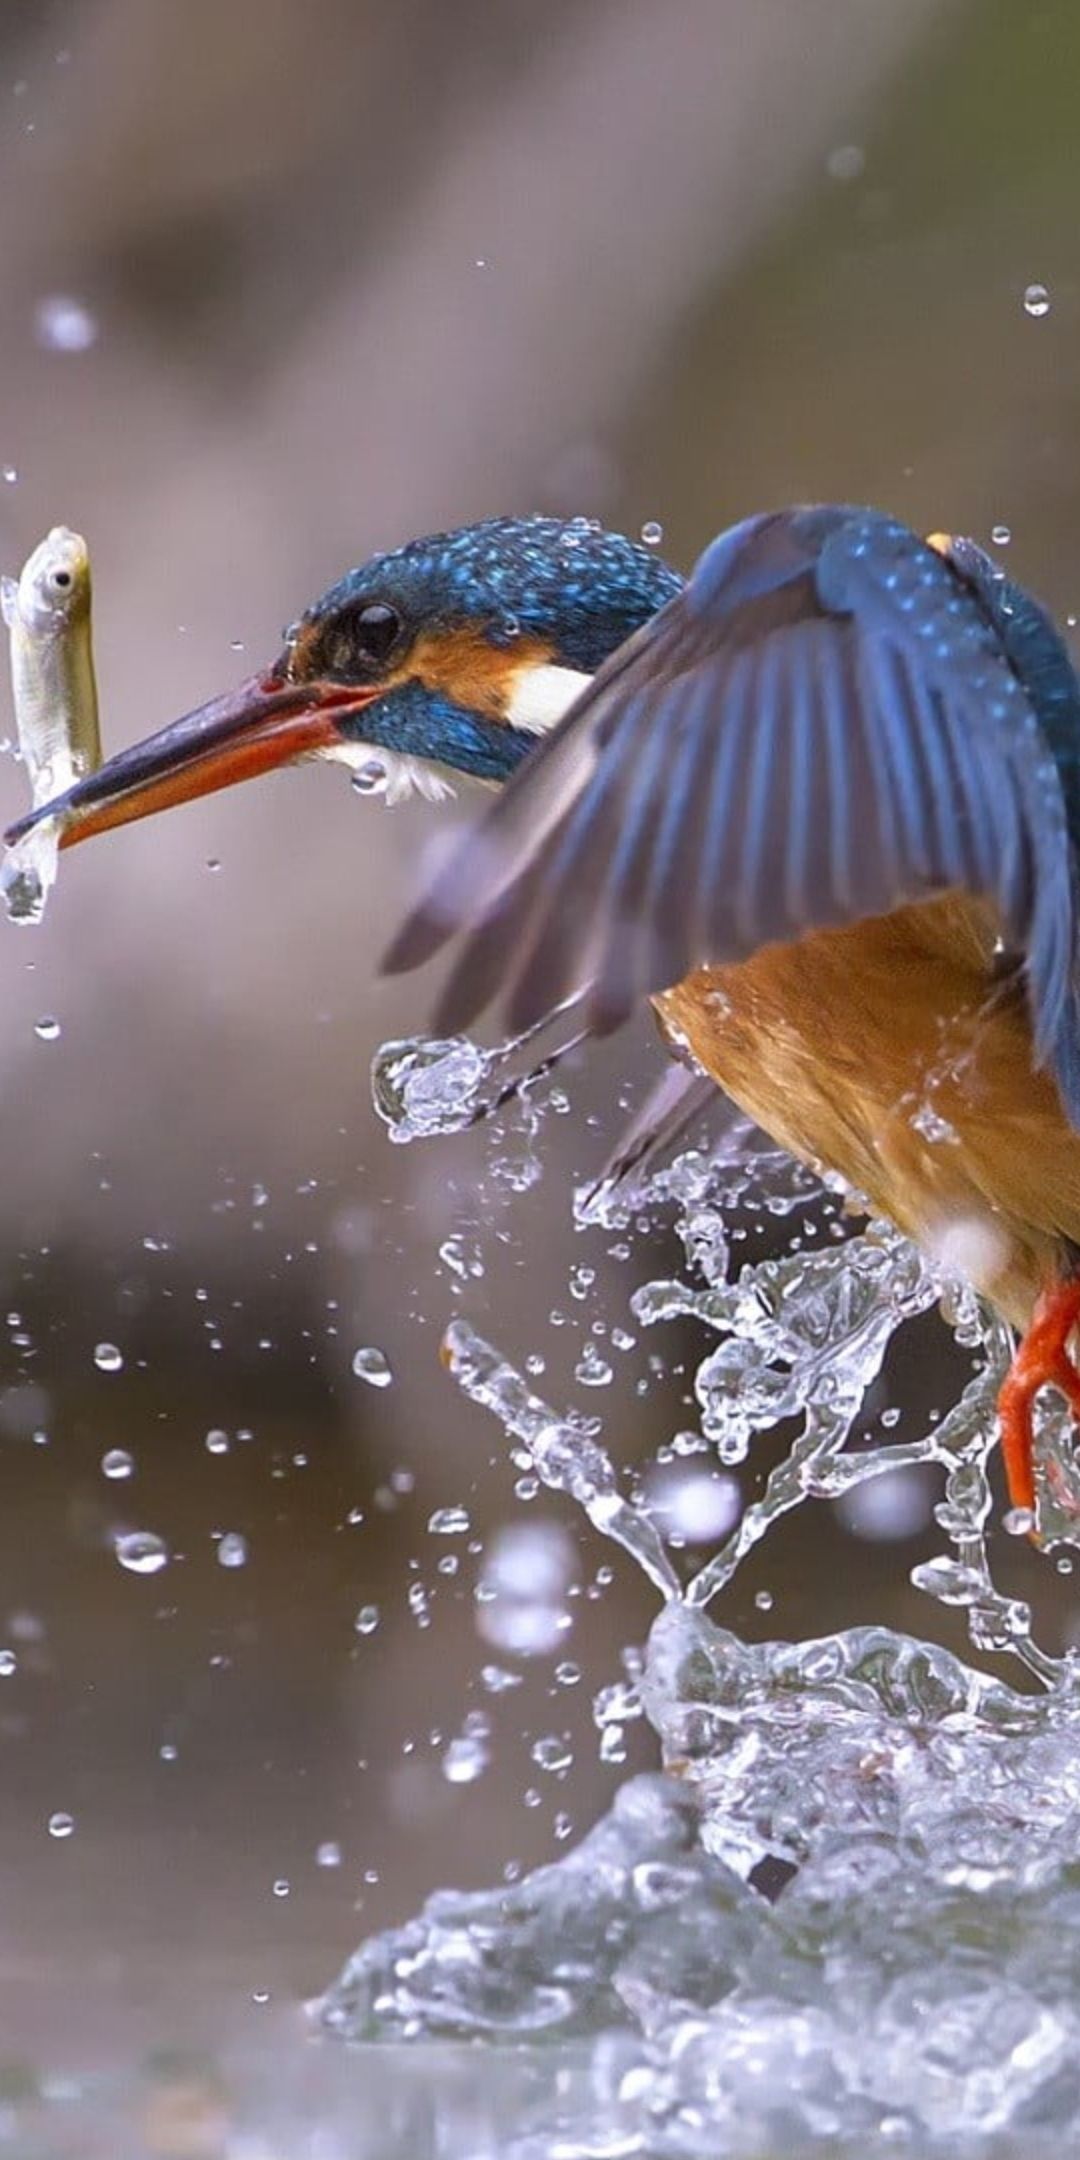 Kingfisher, bird, fishing, water splashes wallpaper. Bird, Bird wallpaper, Kingfisher